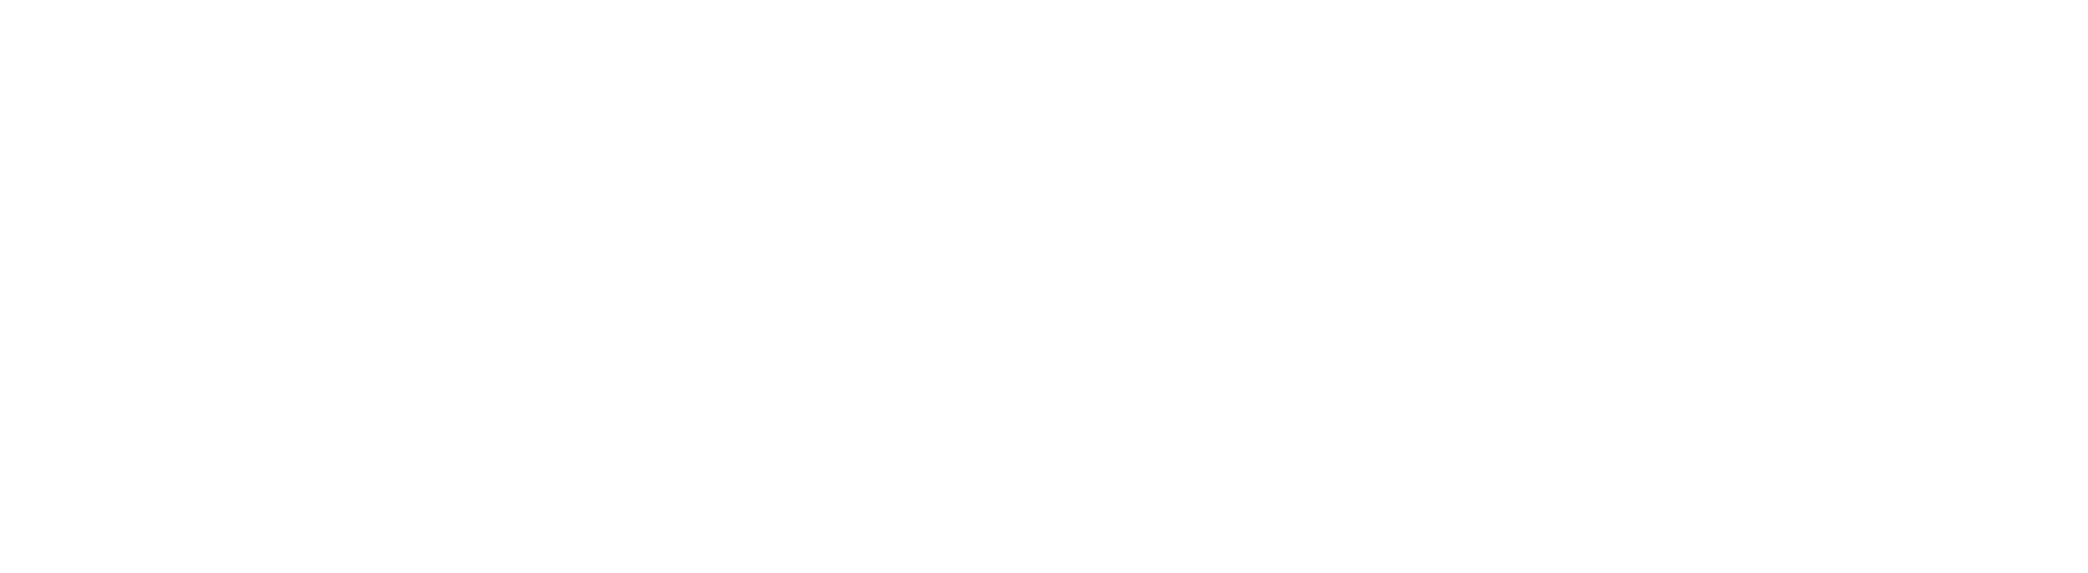 Wildfire Express Delivery Wildfire Express Delivery - Deliv Express Logo Clipart (2088x678), Png Download